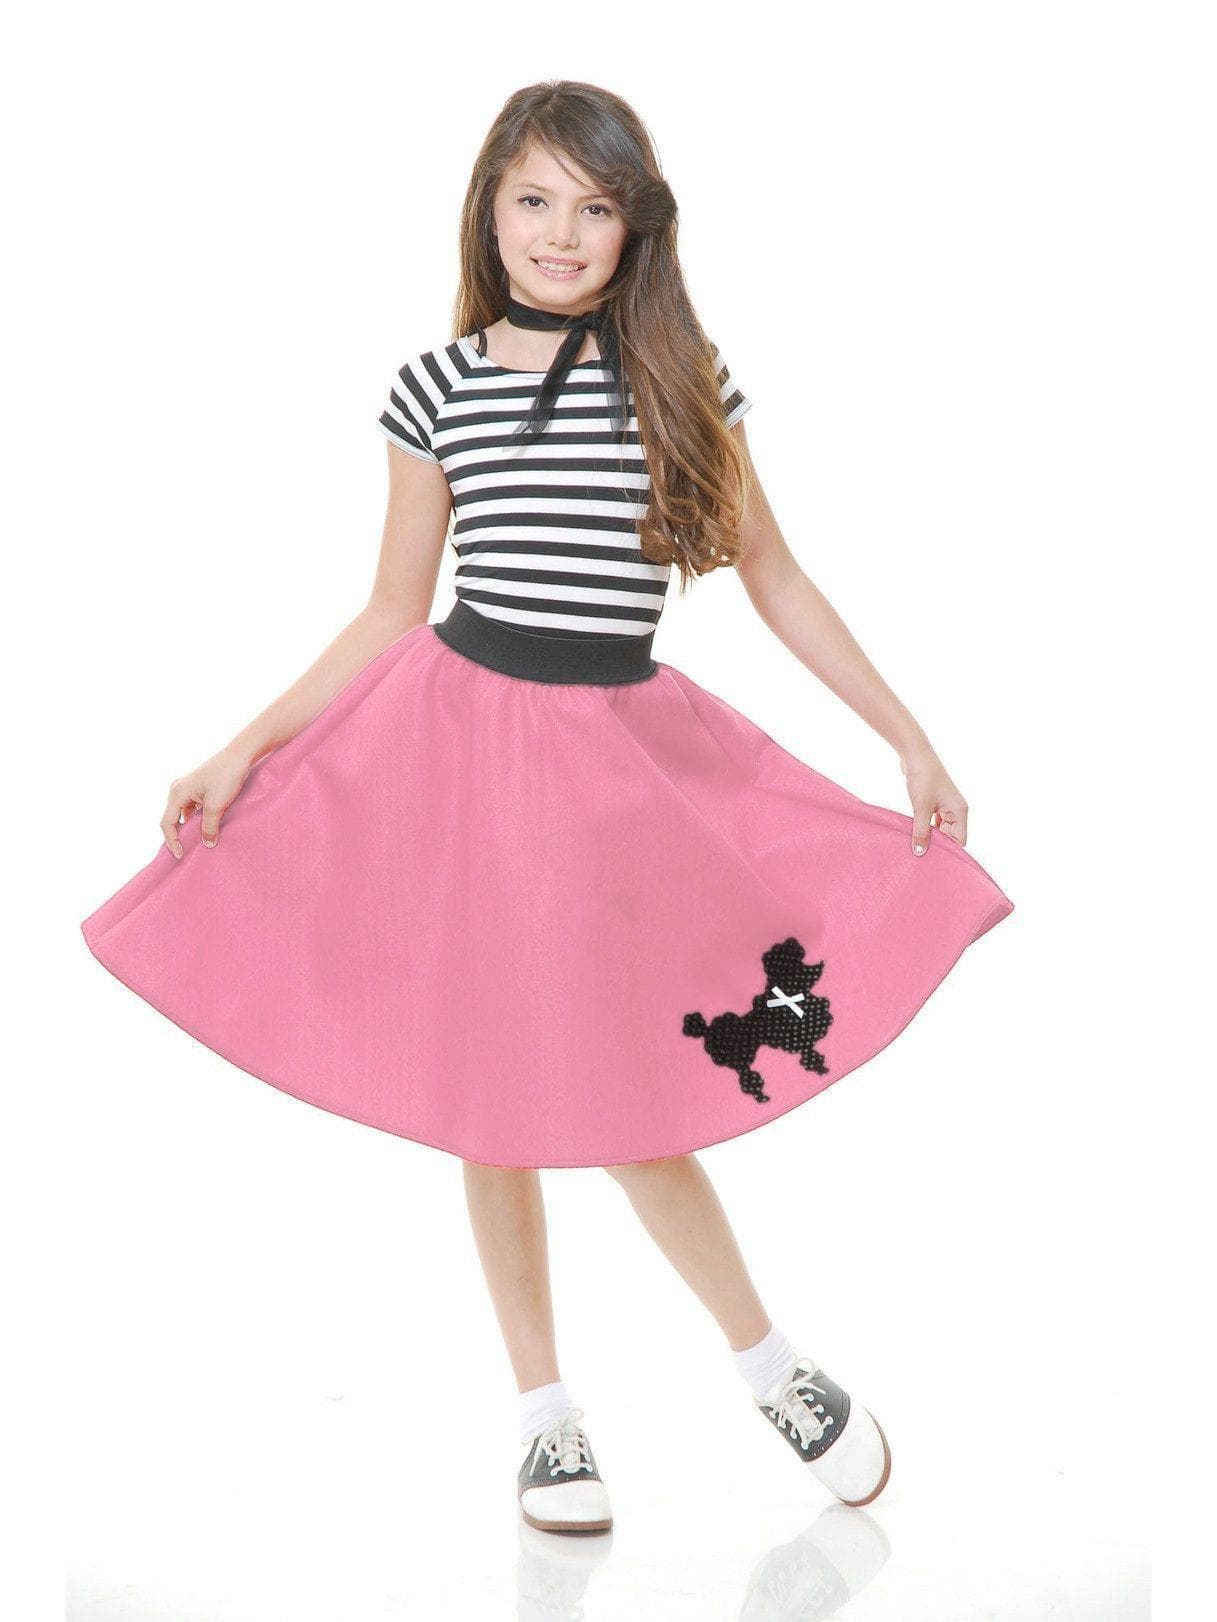 Kid's Poodle Skirt Costume - costumes.com